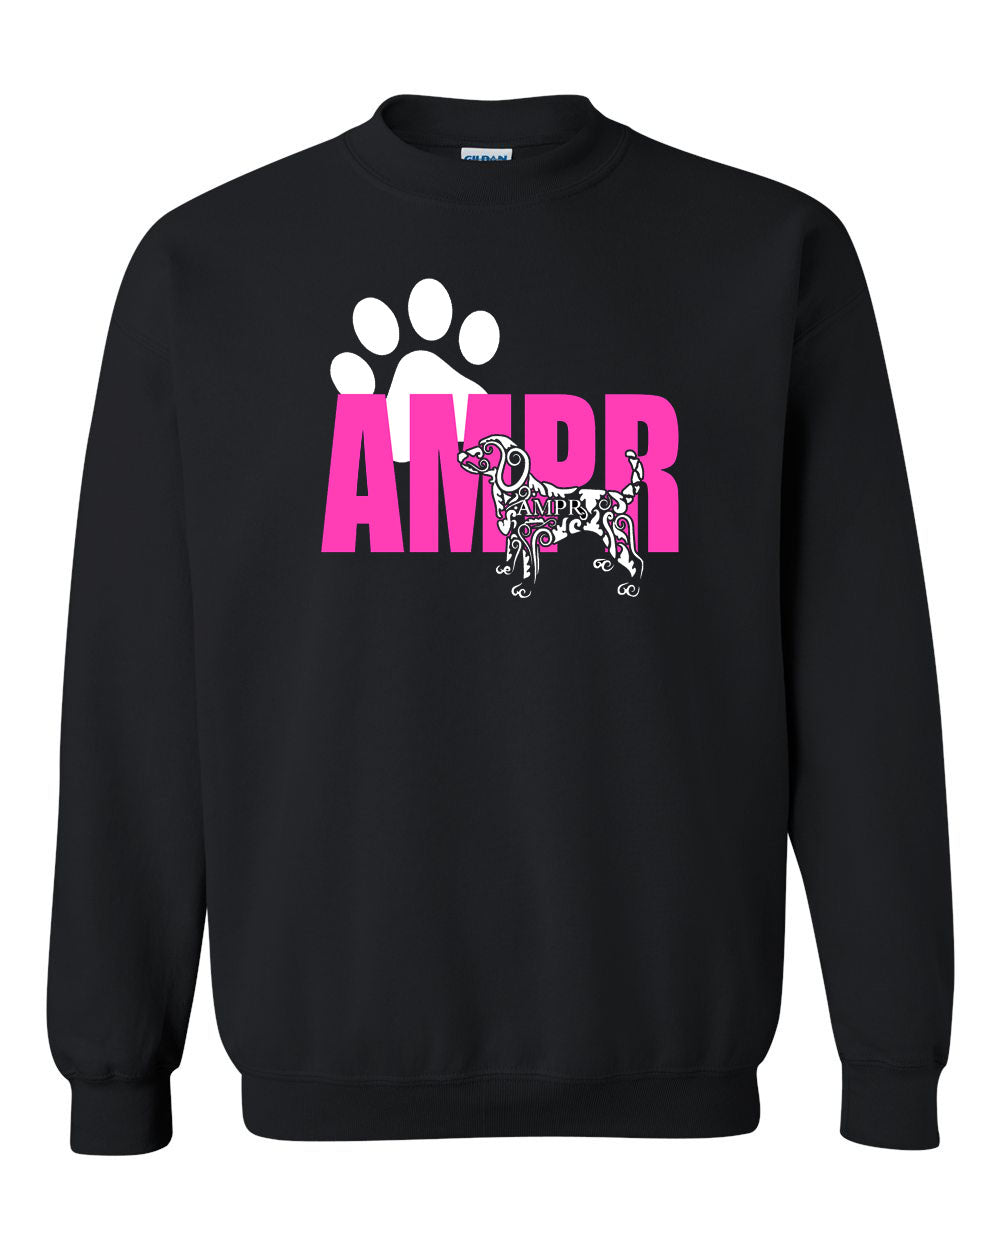 Ampr design 1 non hooded sweatshirt